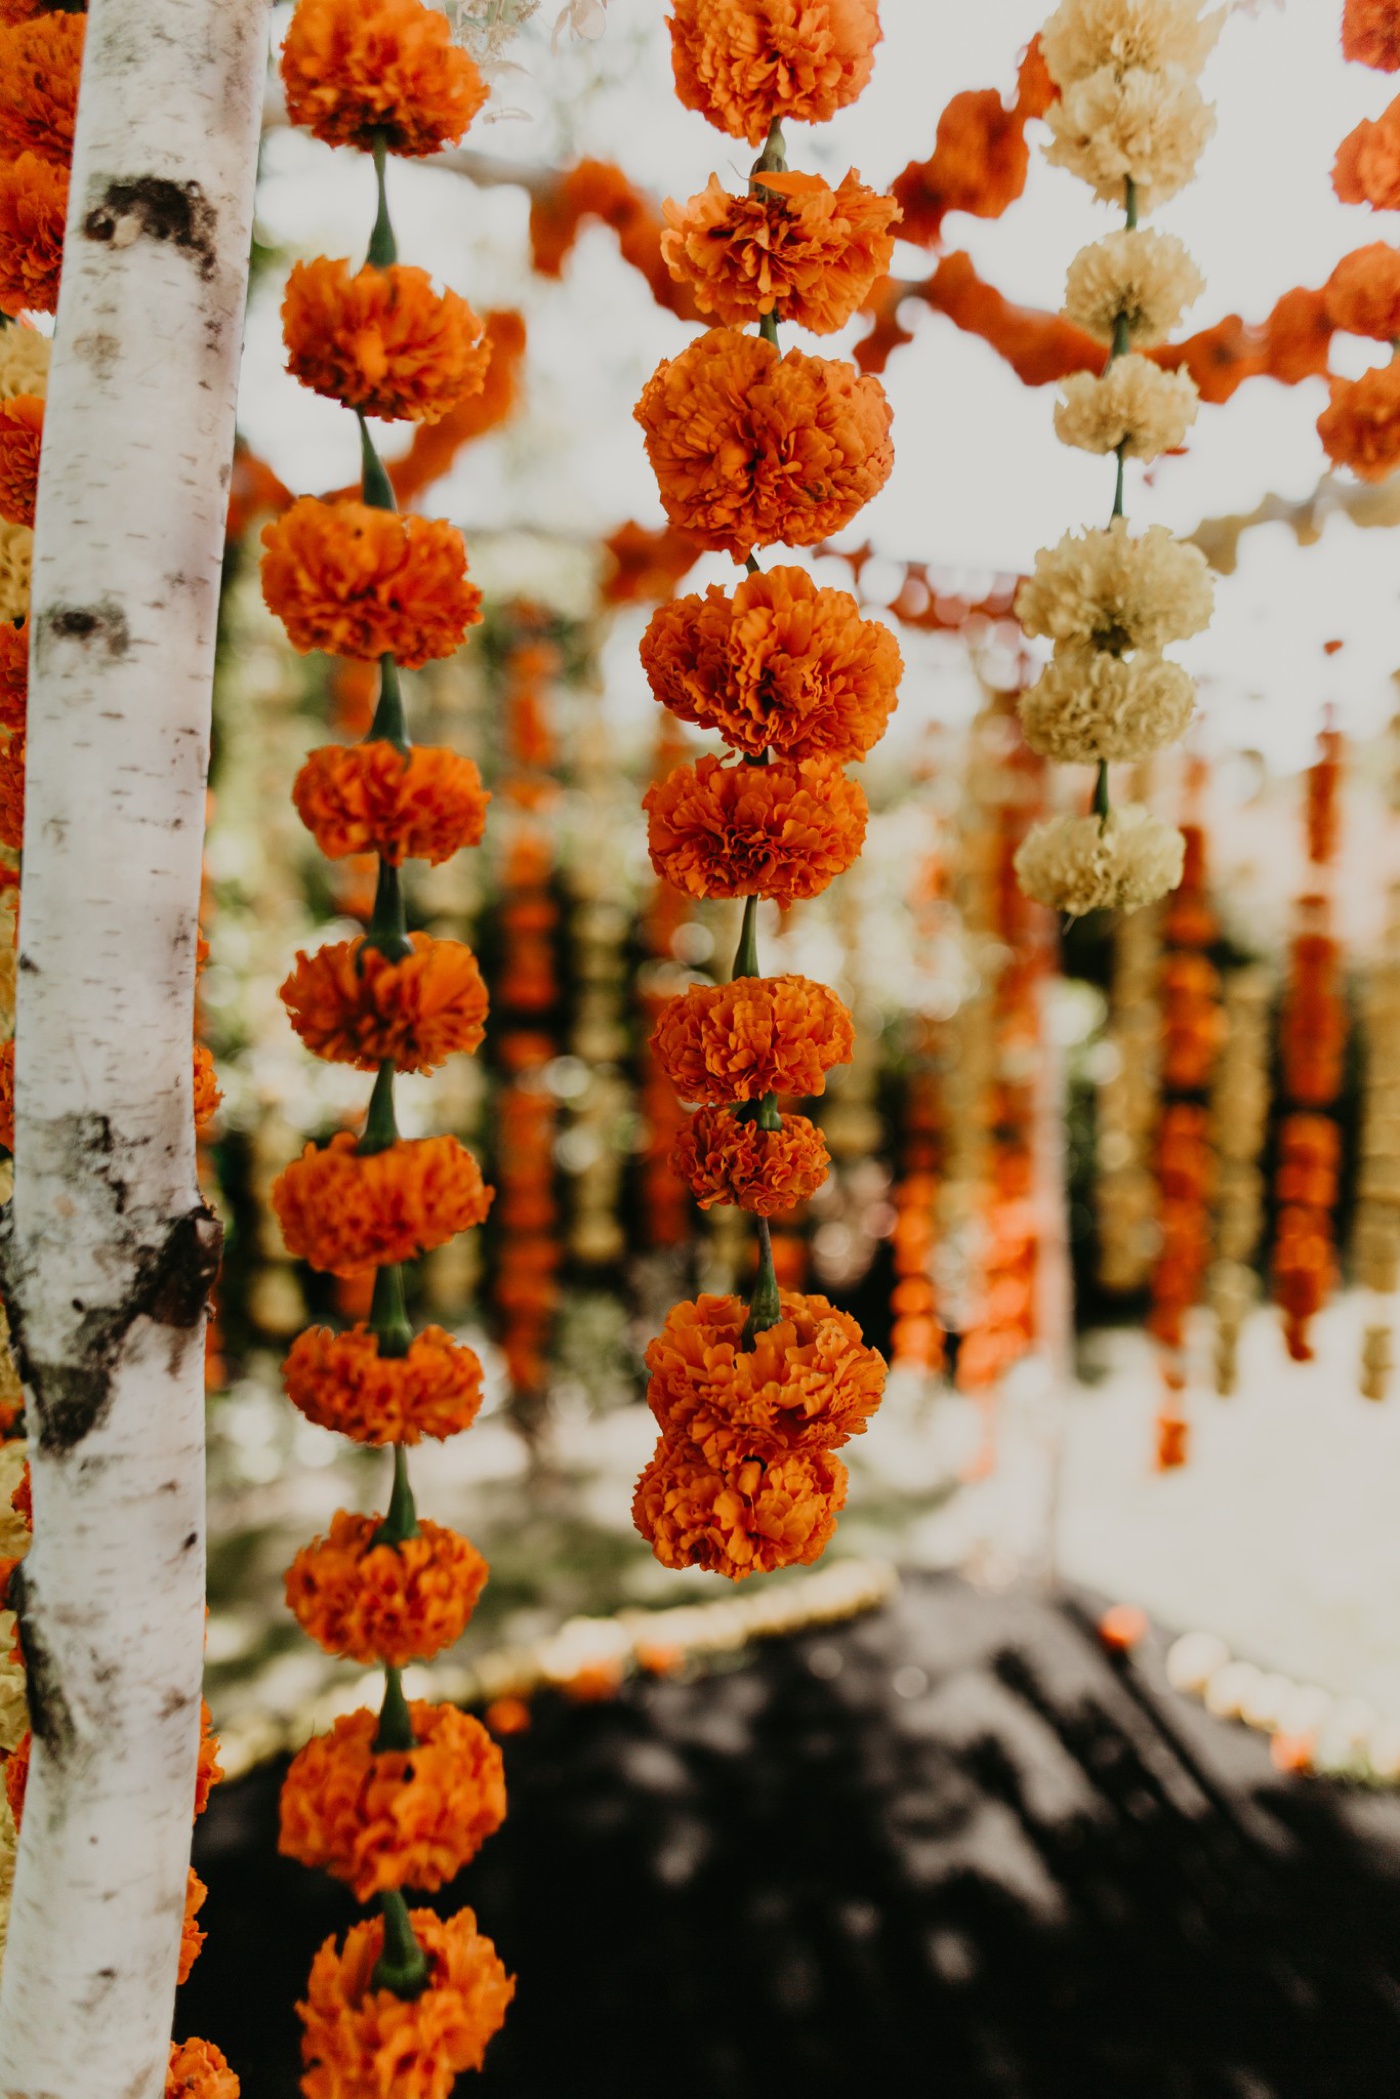 Birch wedding ceremony arch with hanging marigolds